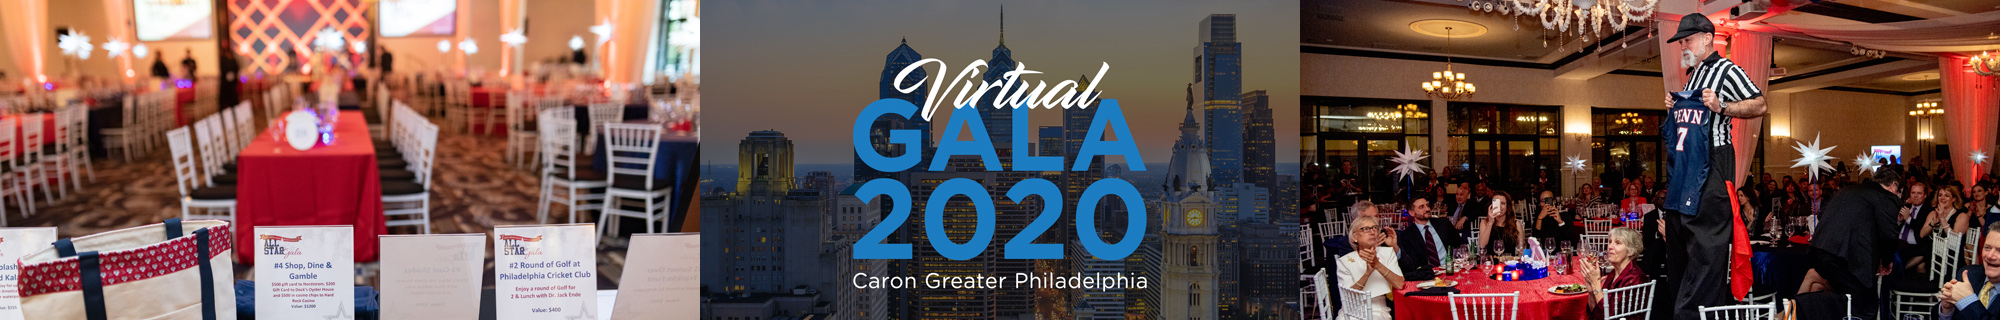 Plan Virtual Meetings by Albrecht Events - Philadelphia Event Planner